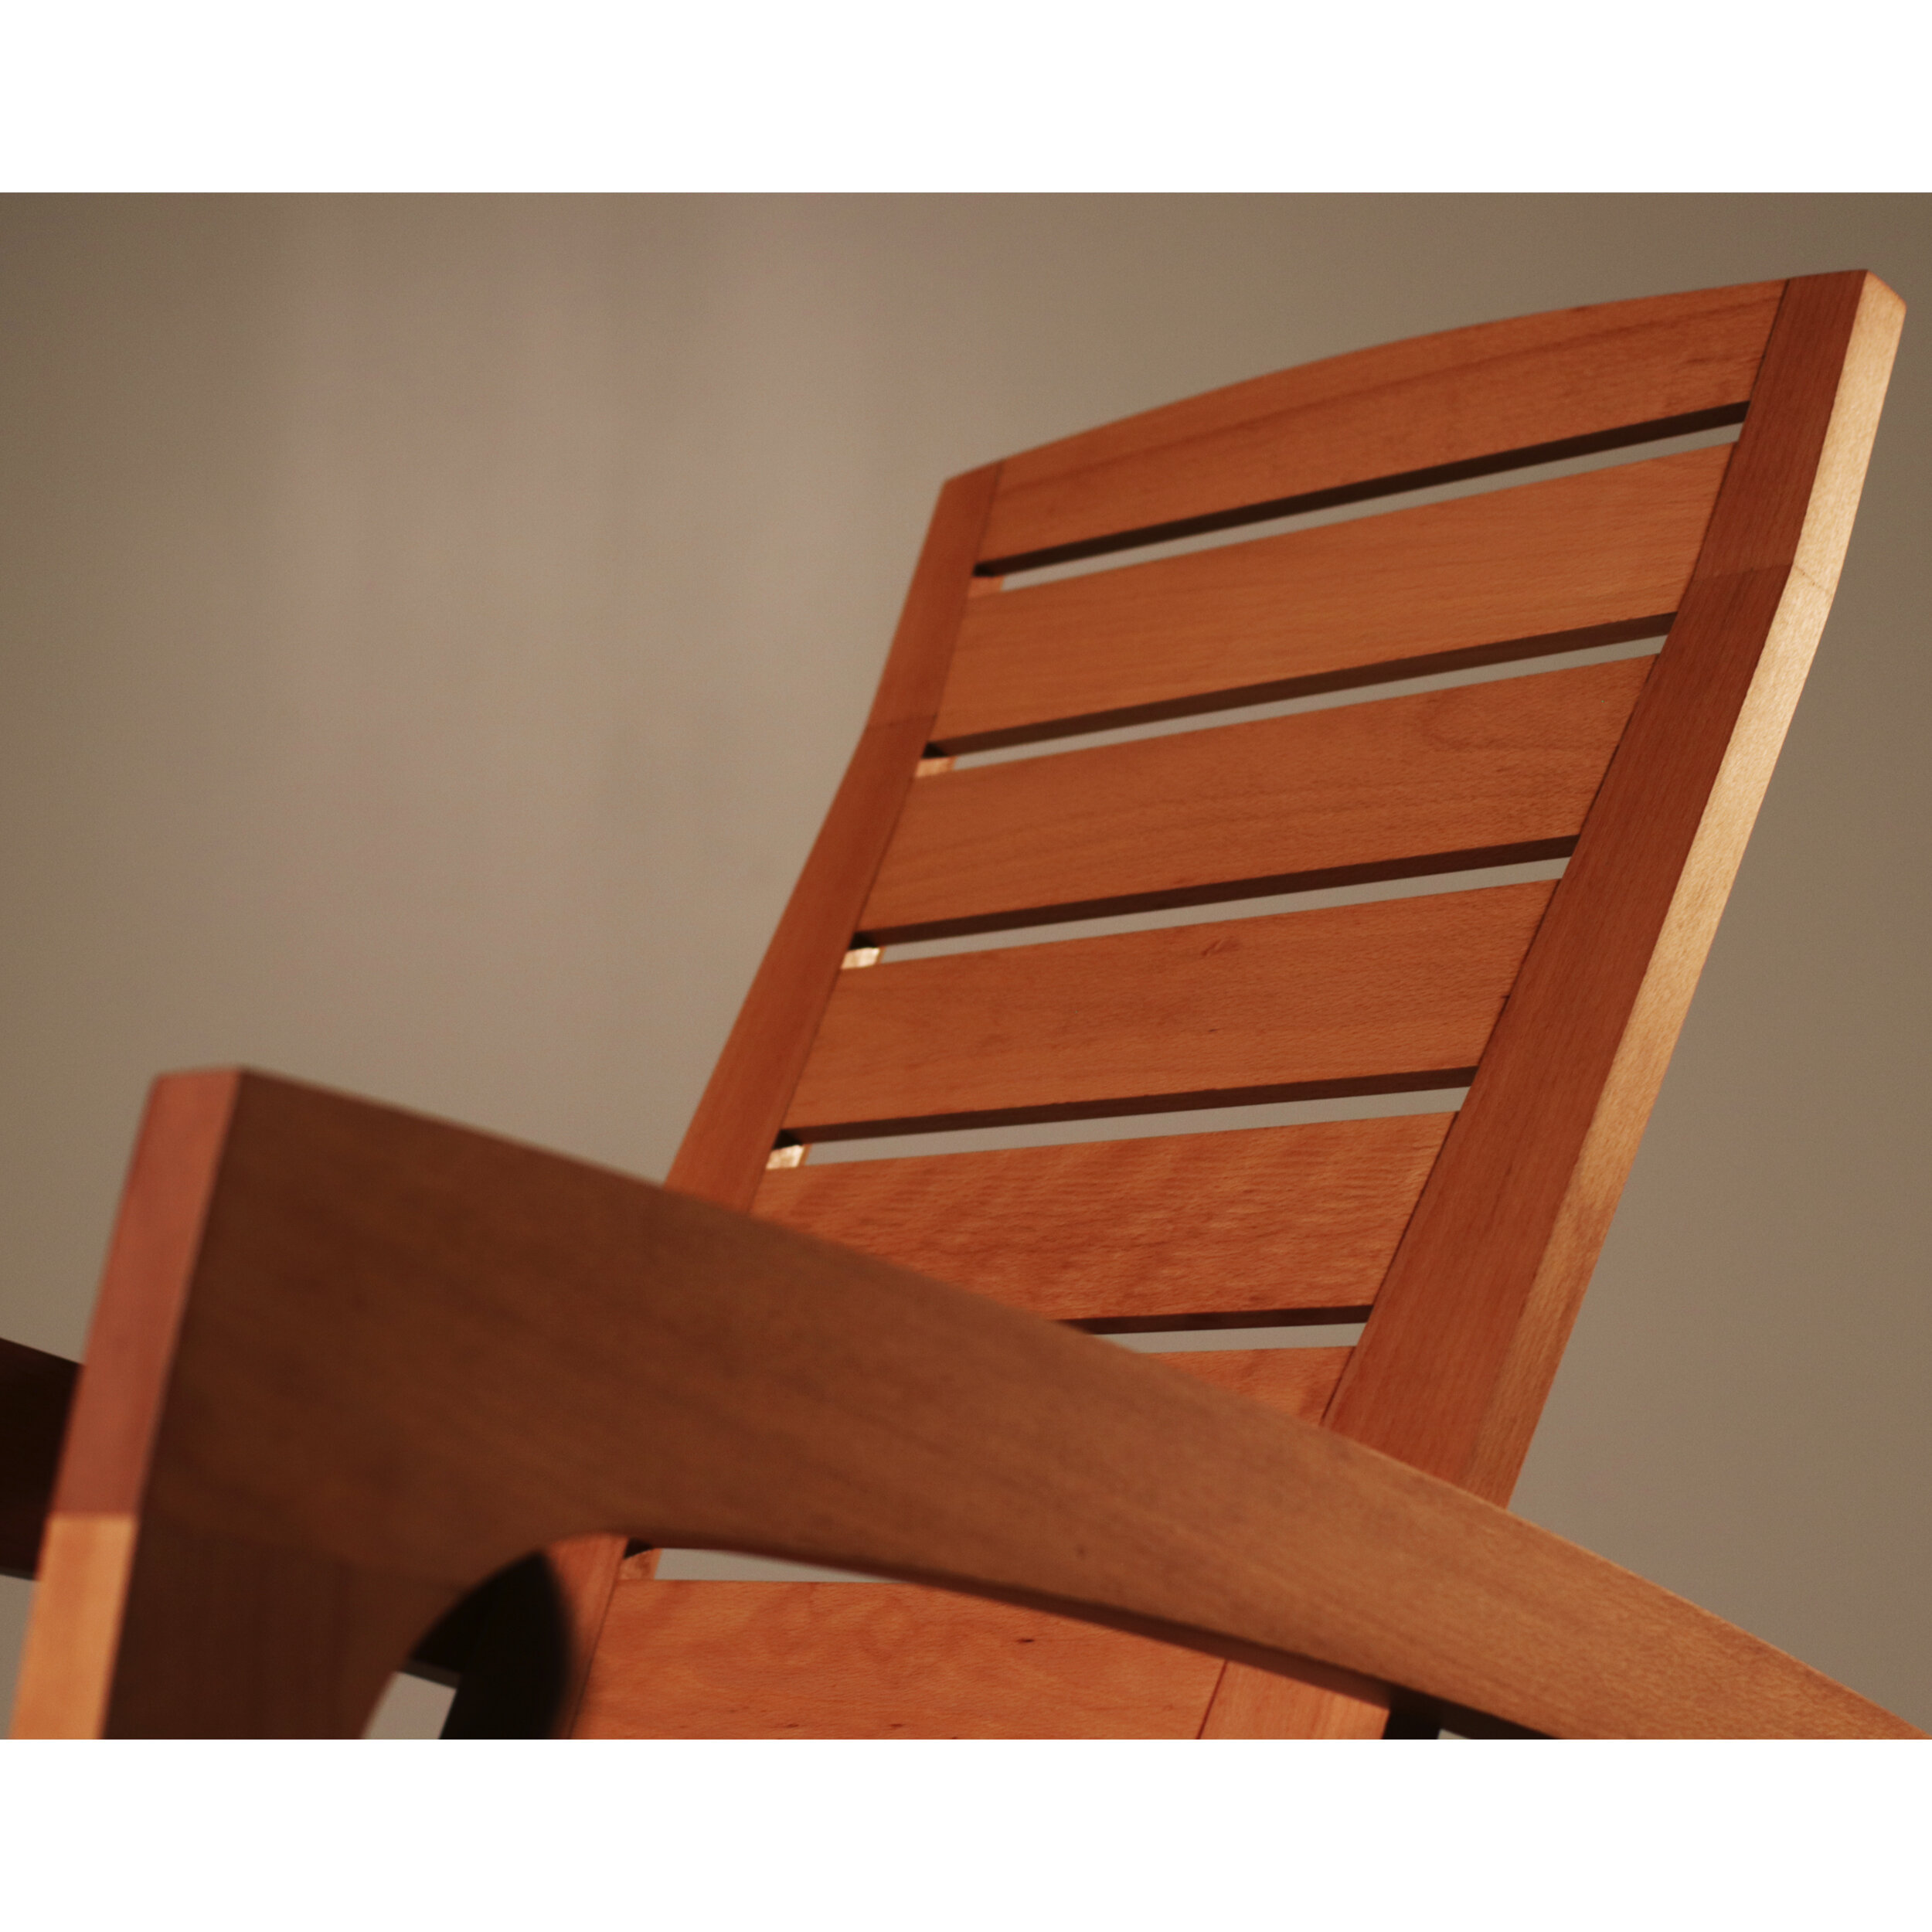 cece-rocking-chair-plans-templates-foureyes-furniture